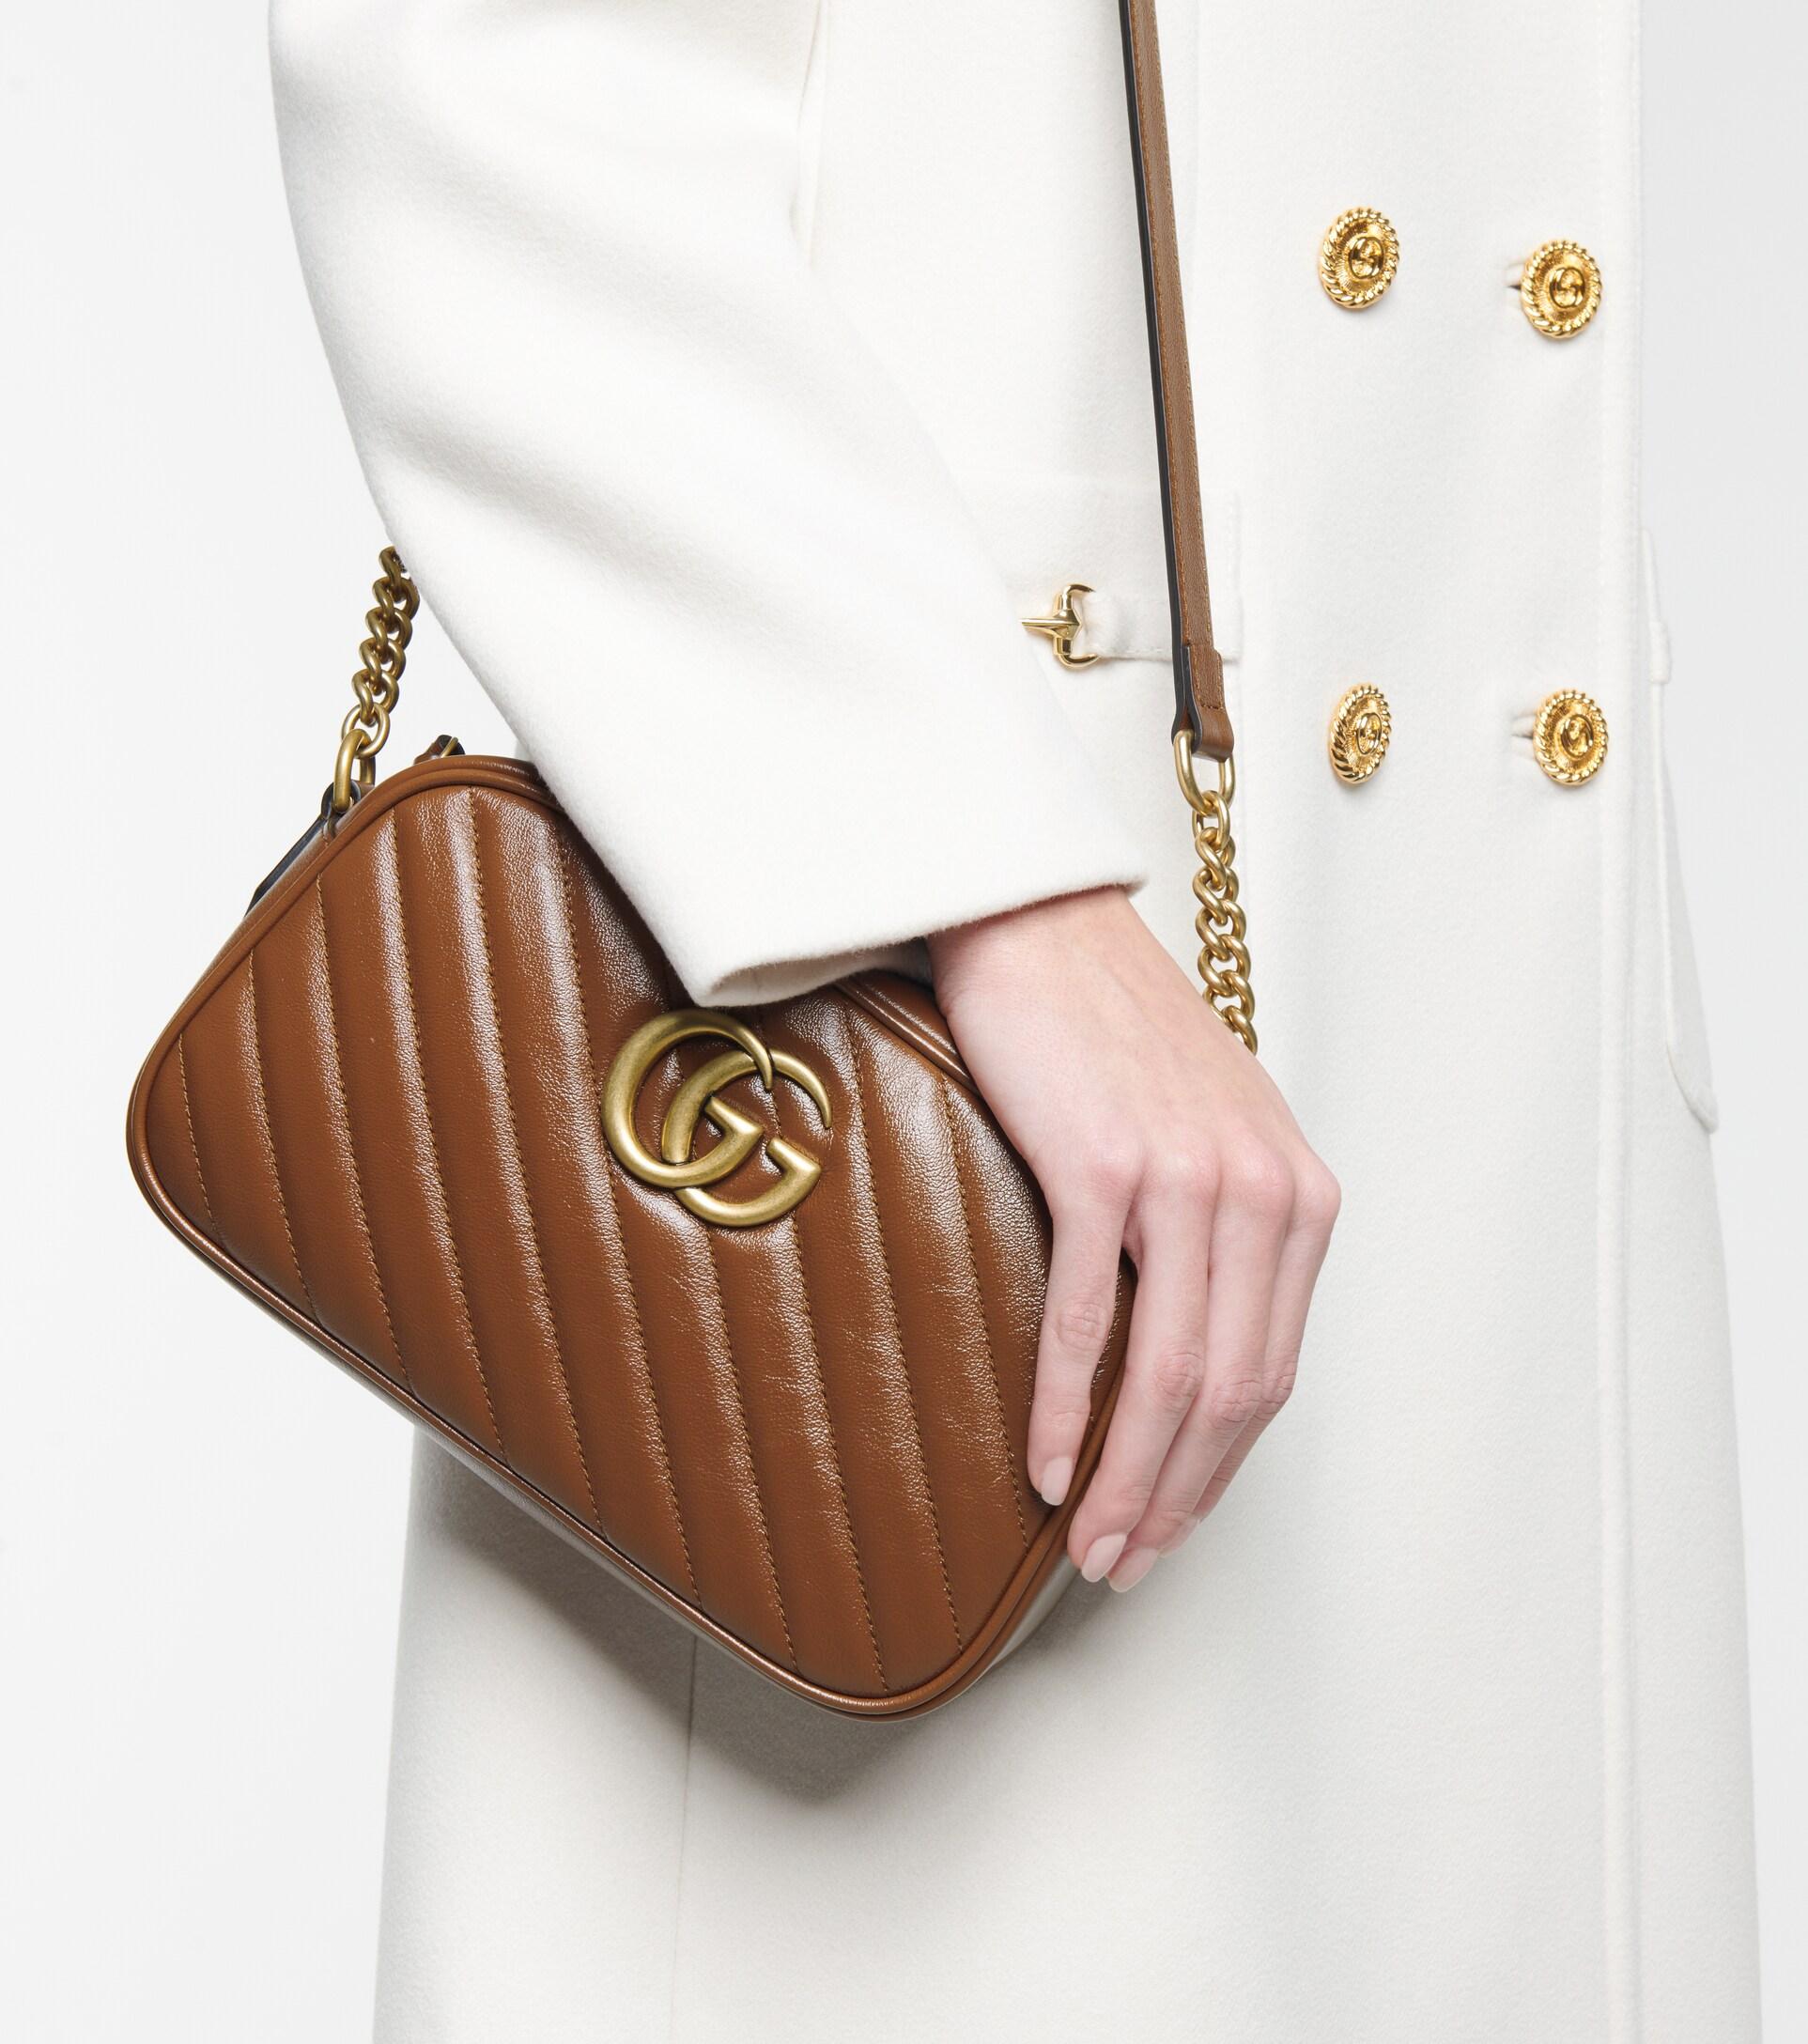 Black GG Marmont 2.0 mini matelassé-leather handbag, Gucci